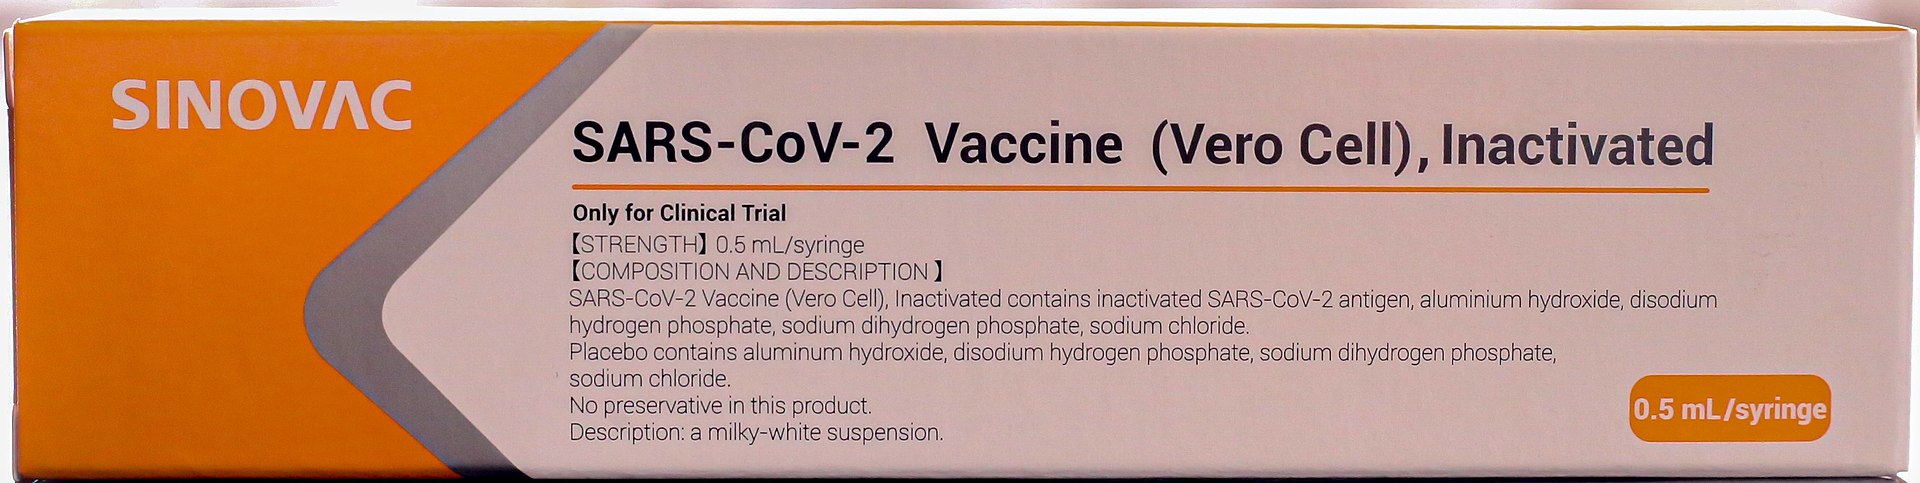 Informations sur le vaccin chinois CoronaVac Covid-19